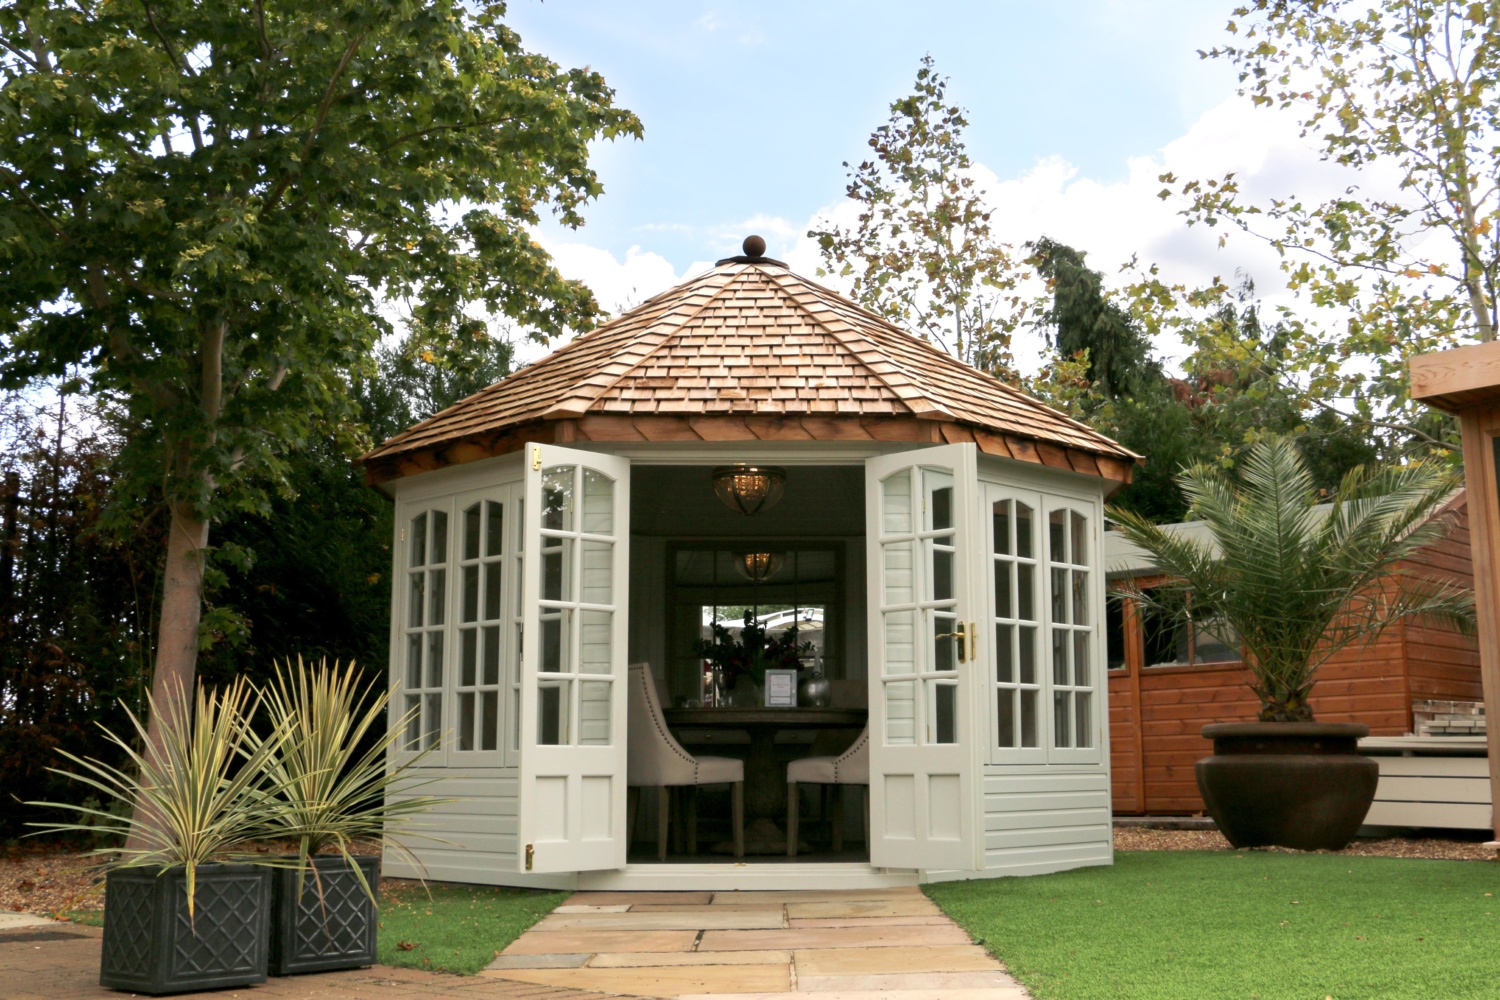 Hopton Summerhouse by Malvern Garden Buildings